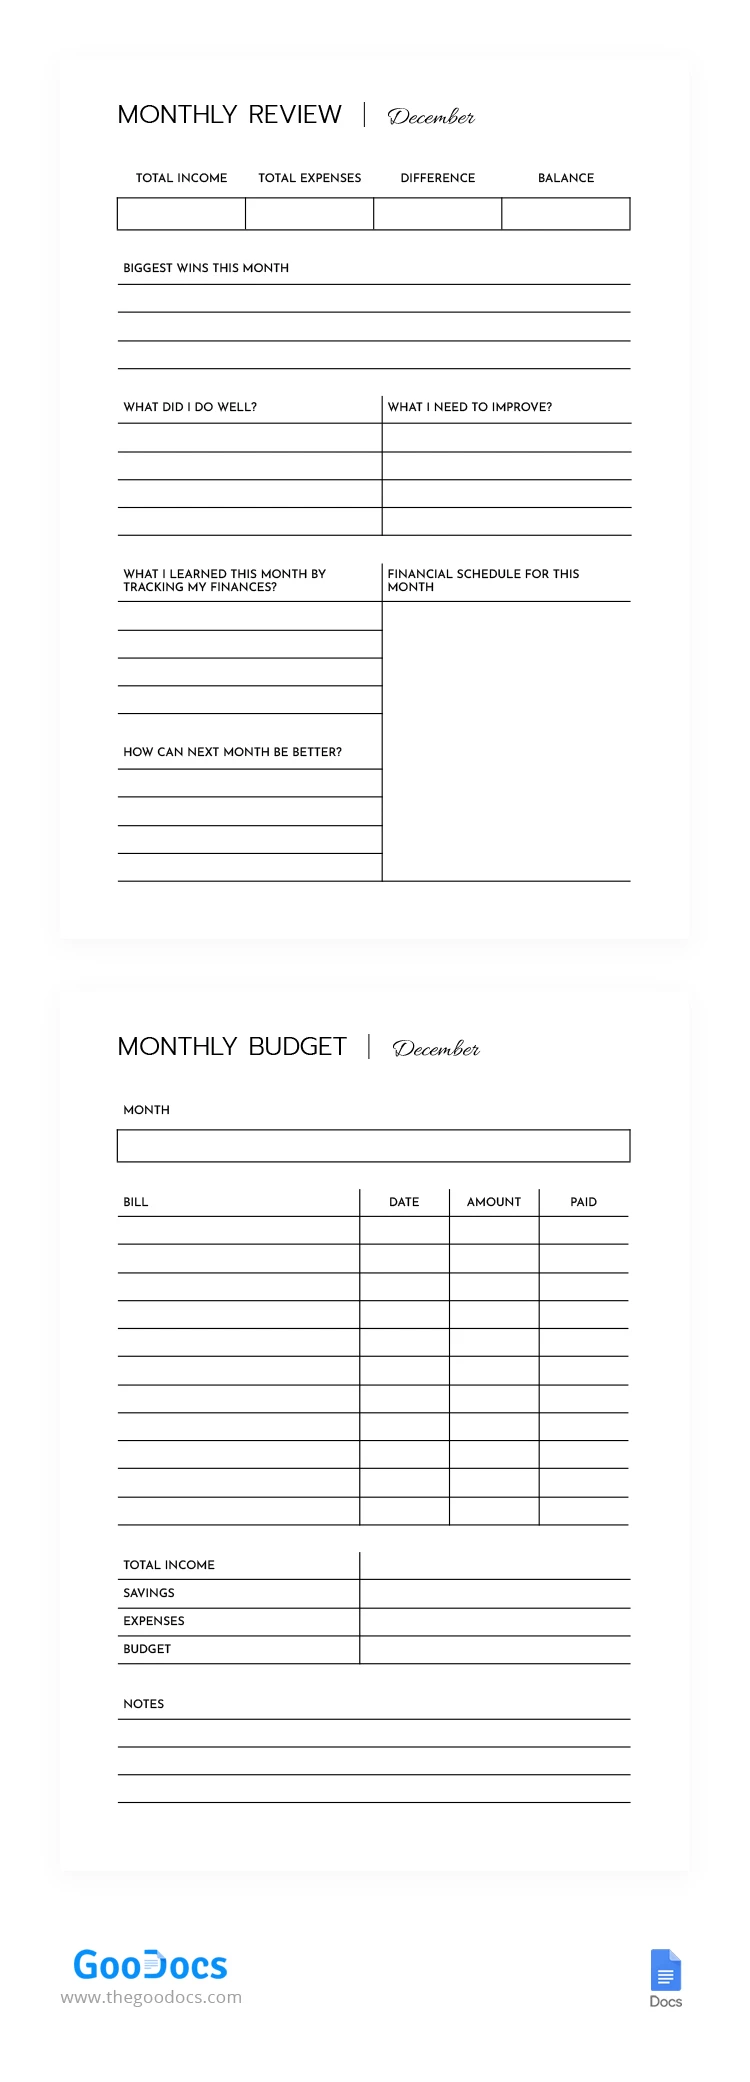 Budget Finanziario Mensile - free Google Docs Template - 10068568